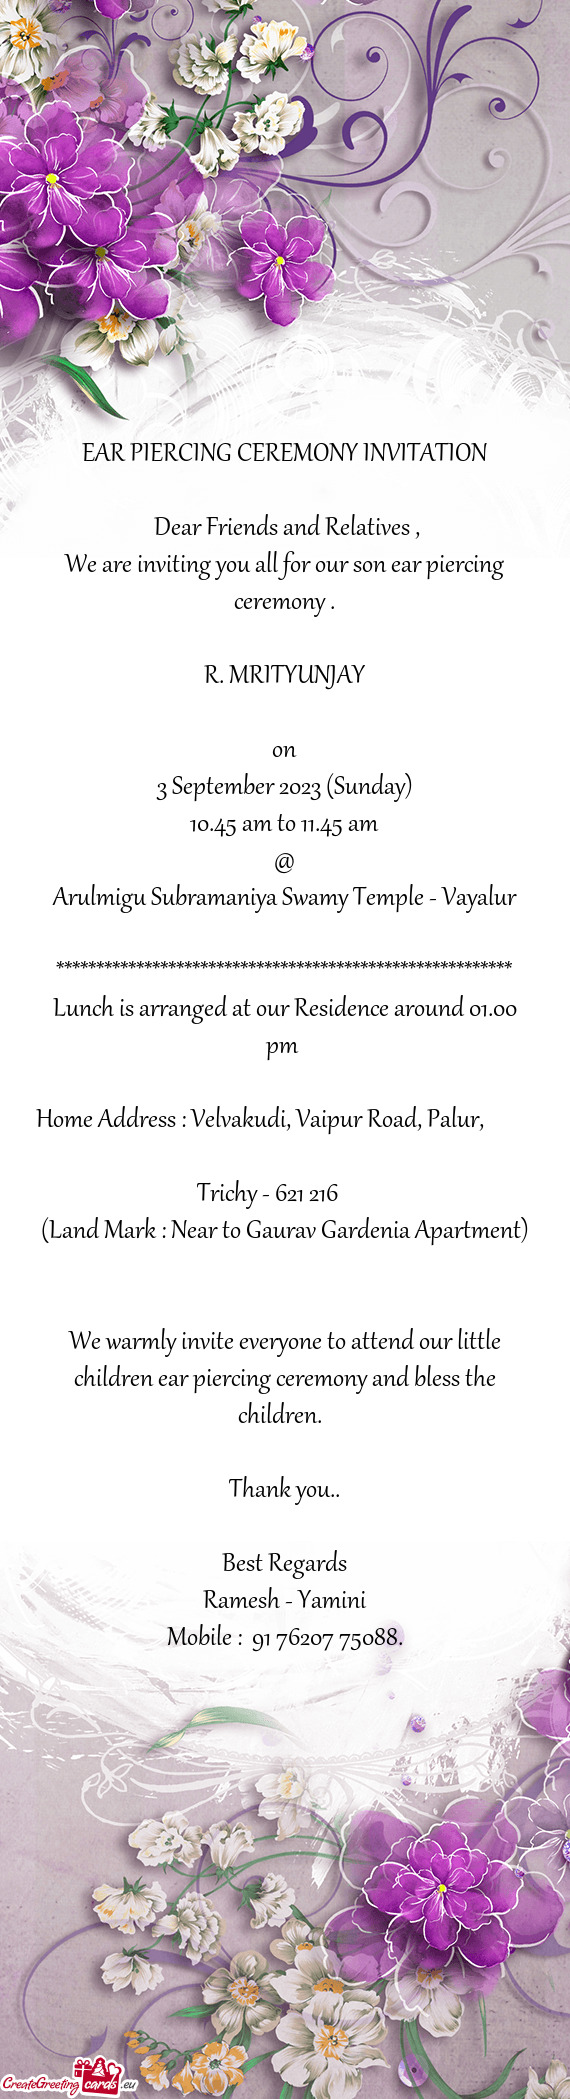 Arulmigu Subramaniya Swamy Temple - Vayalur